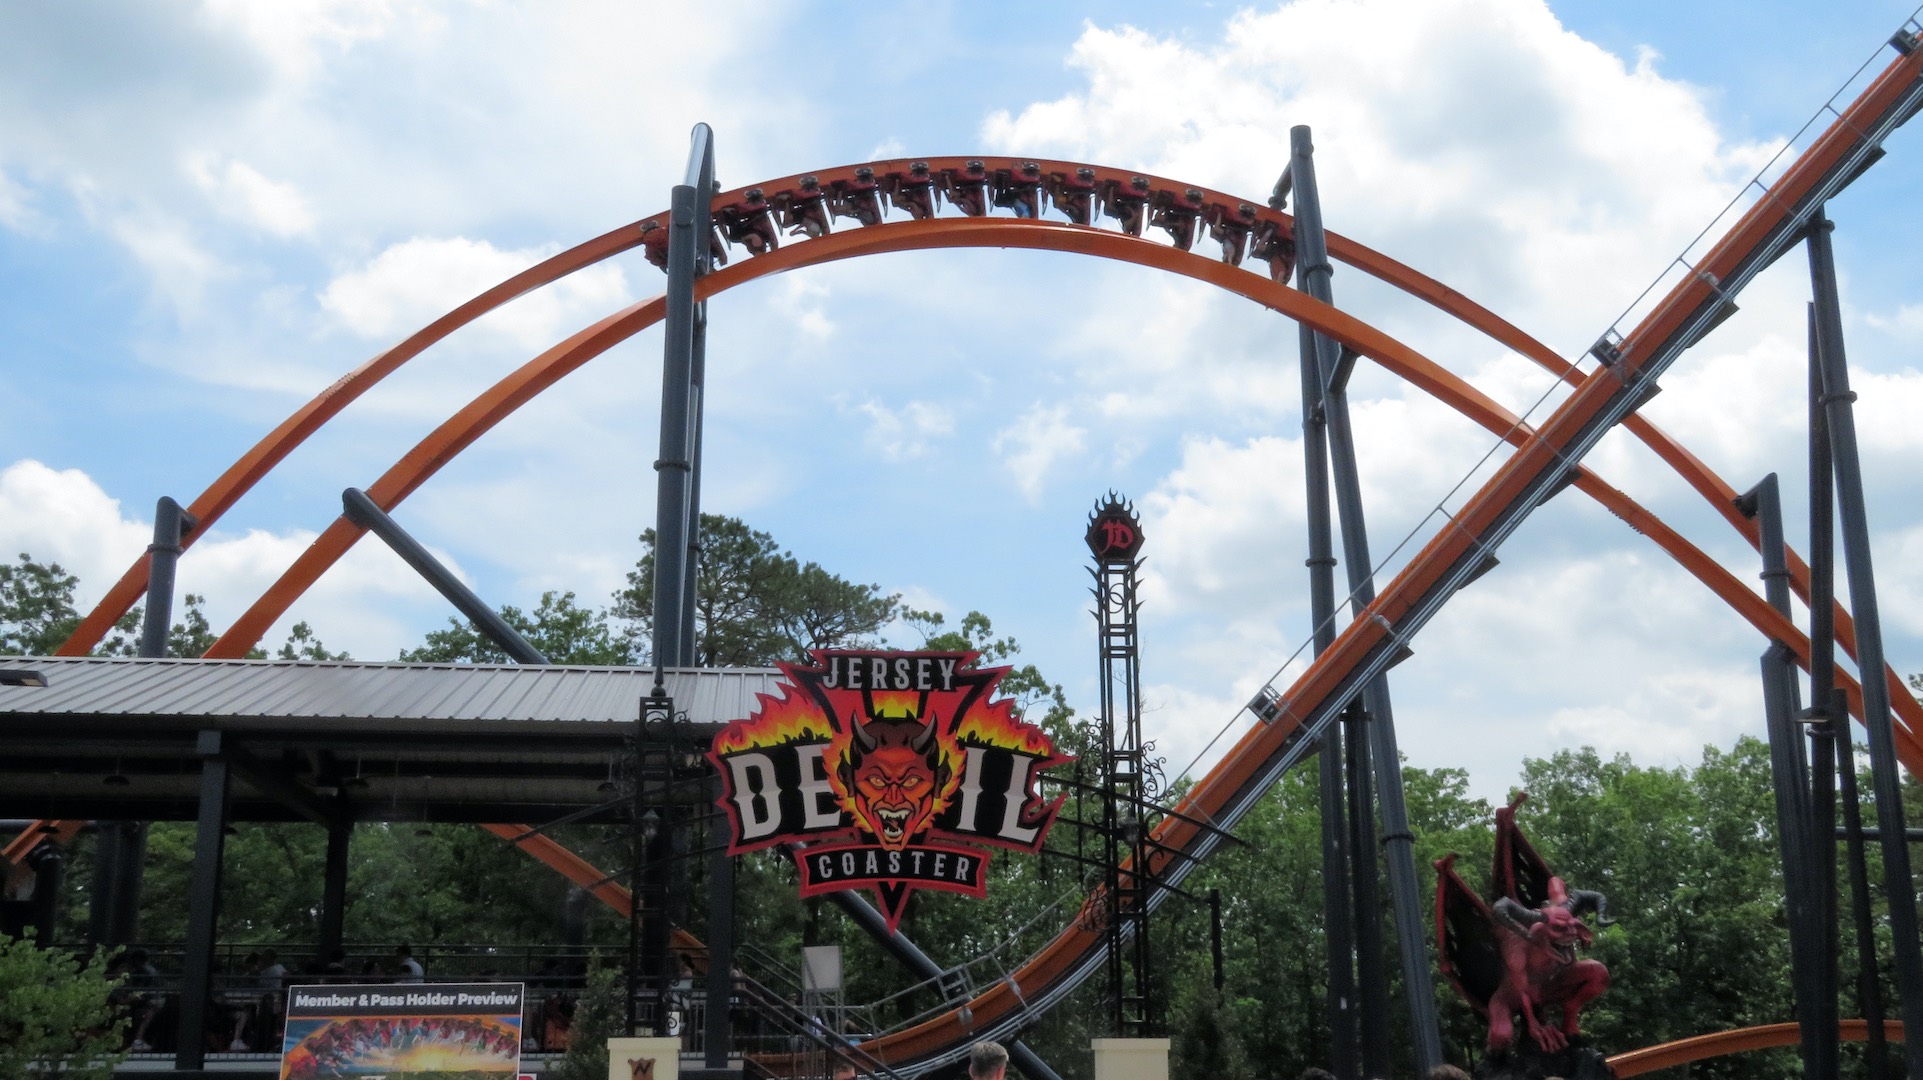 Jersey Devil, world's tallest single-rail roller coaster, opens